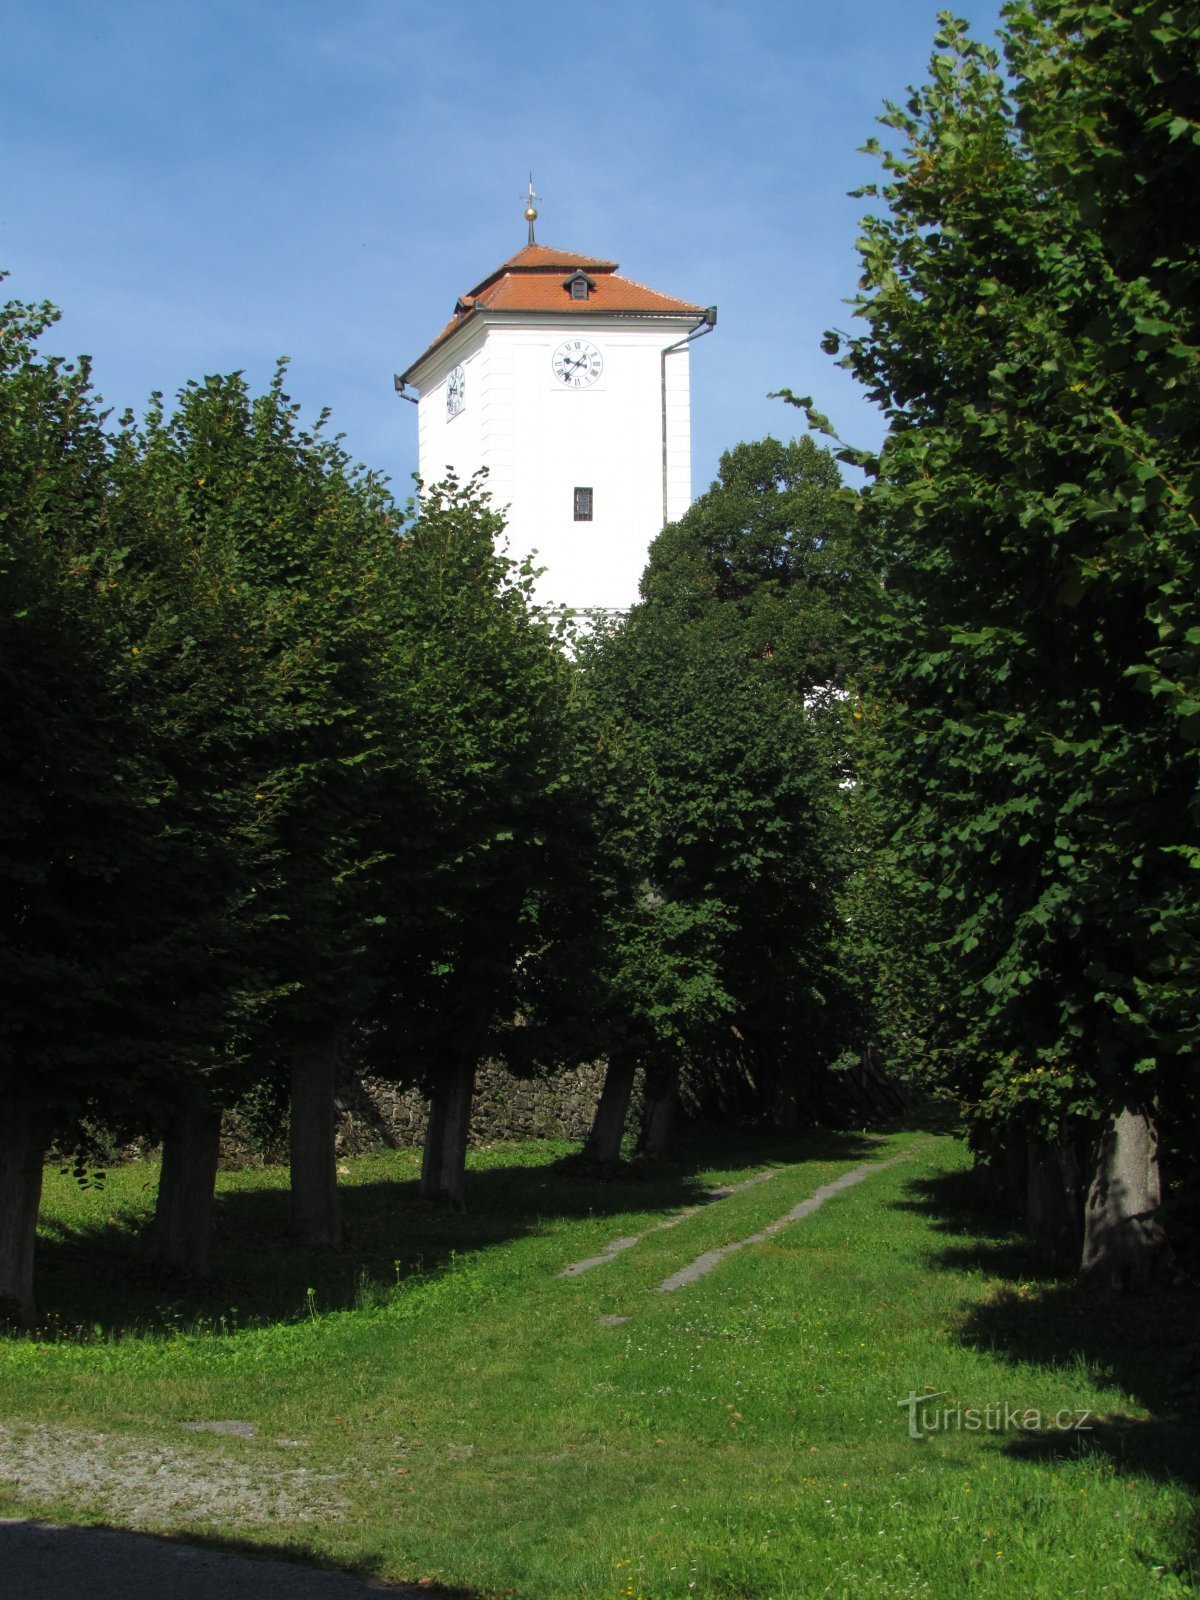 urcând în grădina Habrůvka